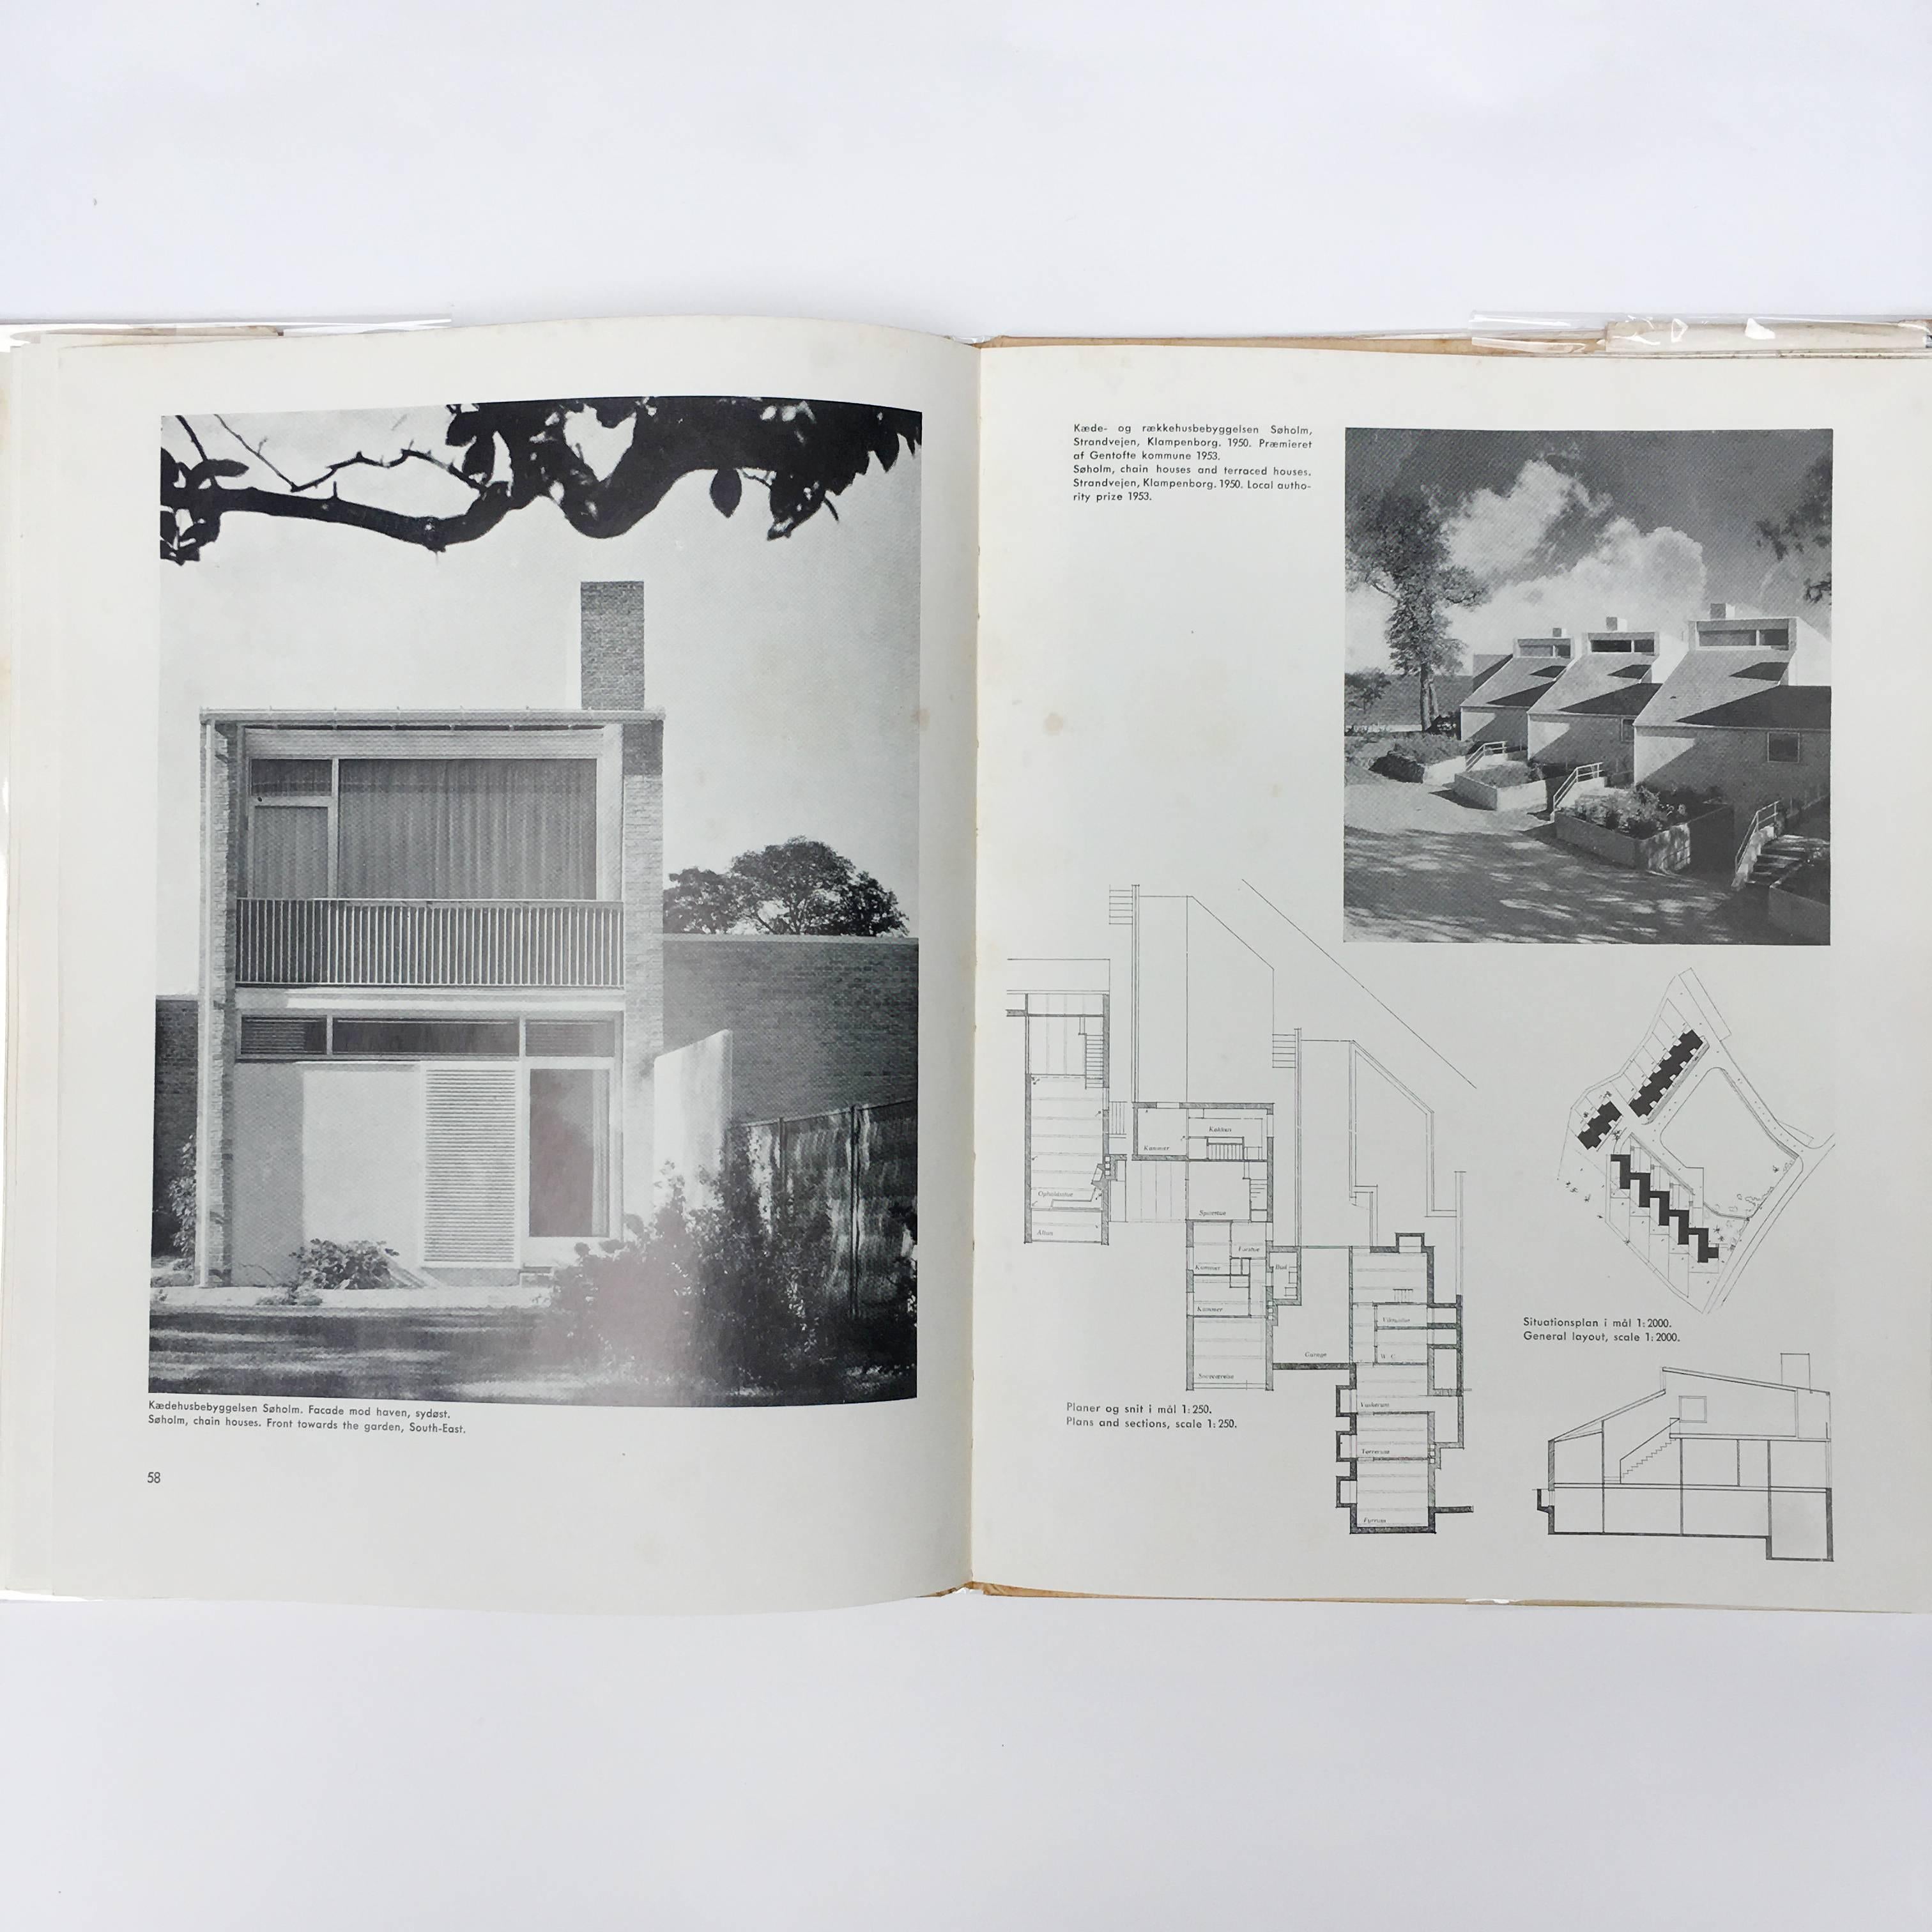 Arkitekten Arne Jacobsen-Johan Pedersen, 1954 en vente 1